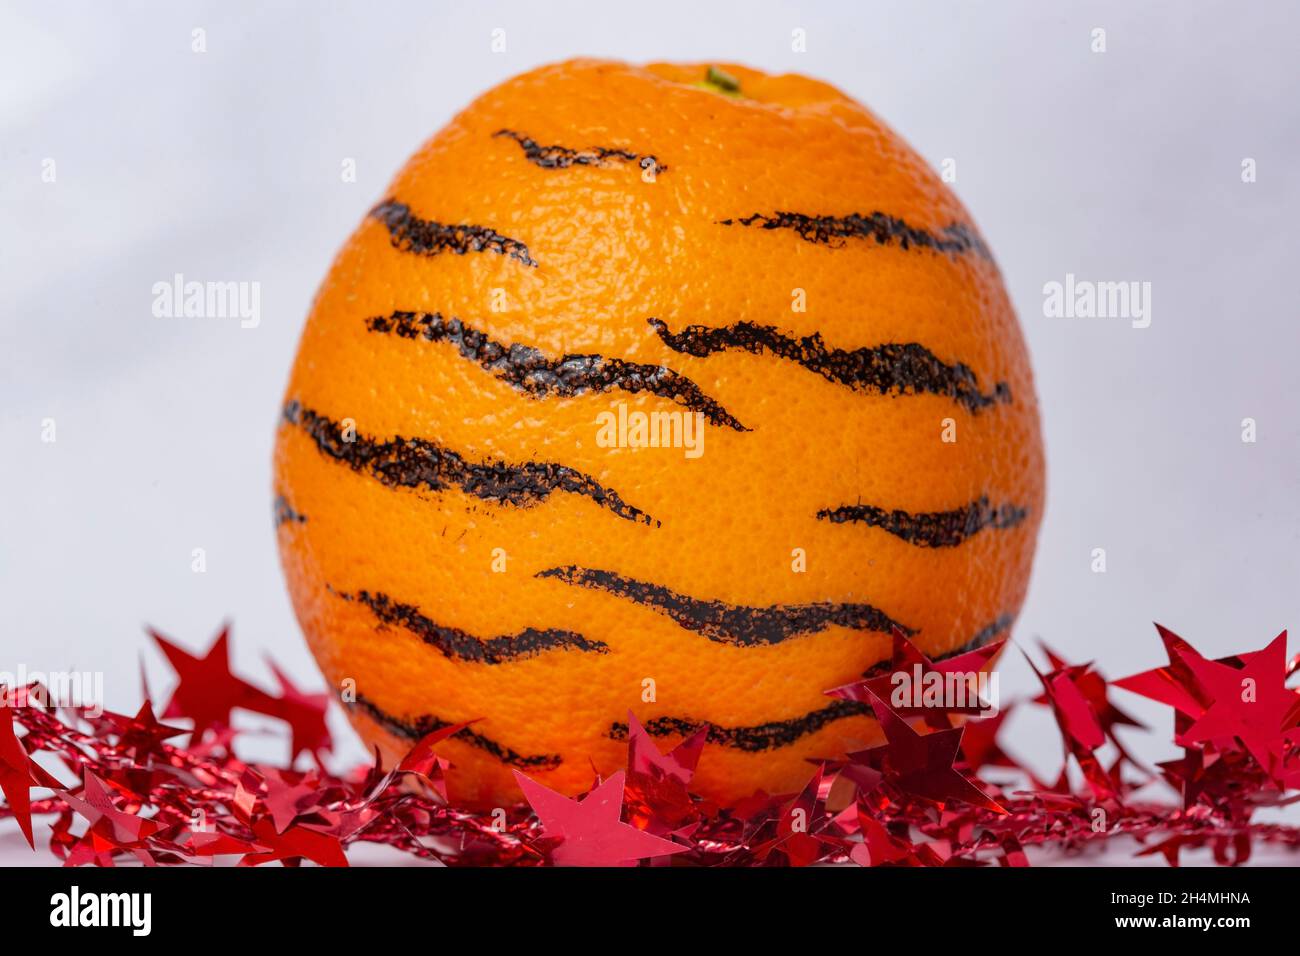 orange fruit with black stripes, happy new Chinese year 2022 Stock Photo